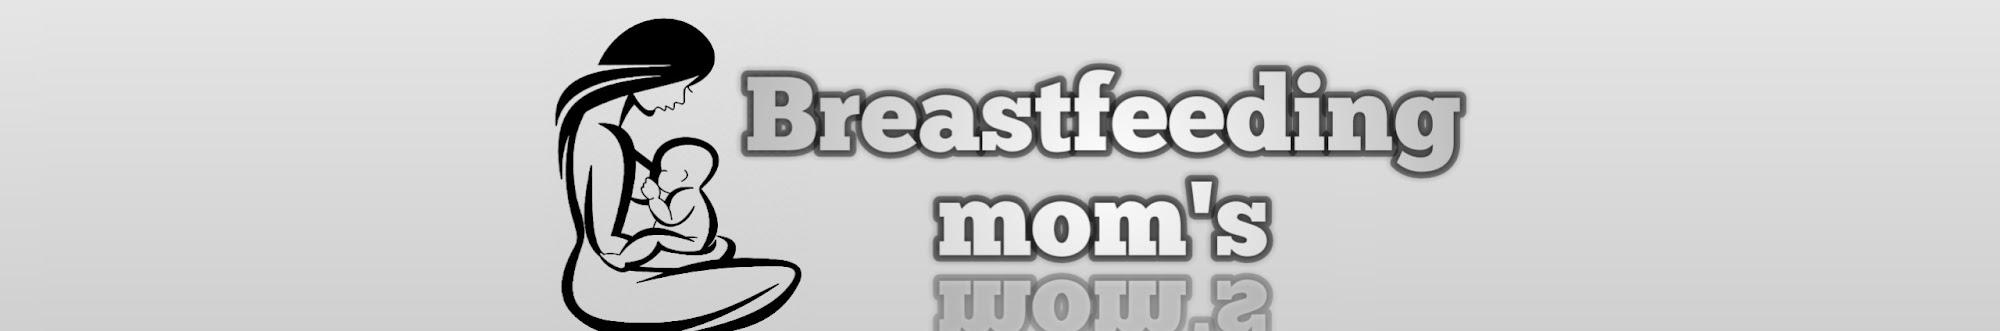 Breastfeeding mom's